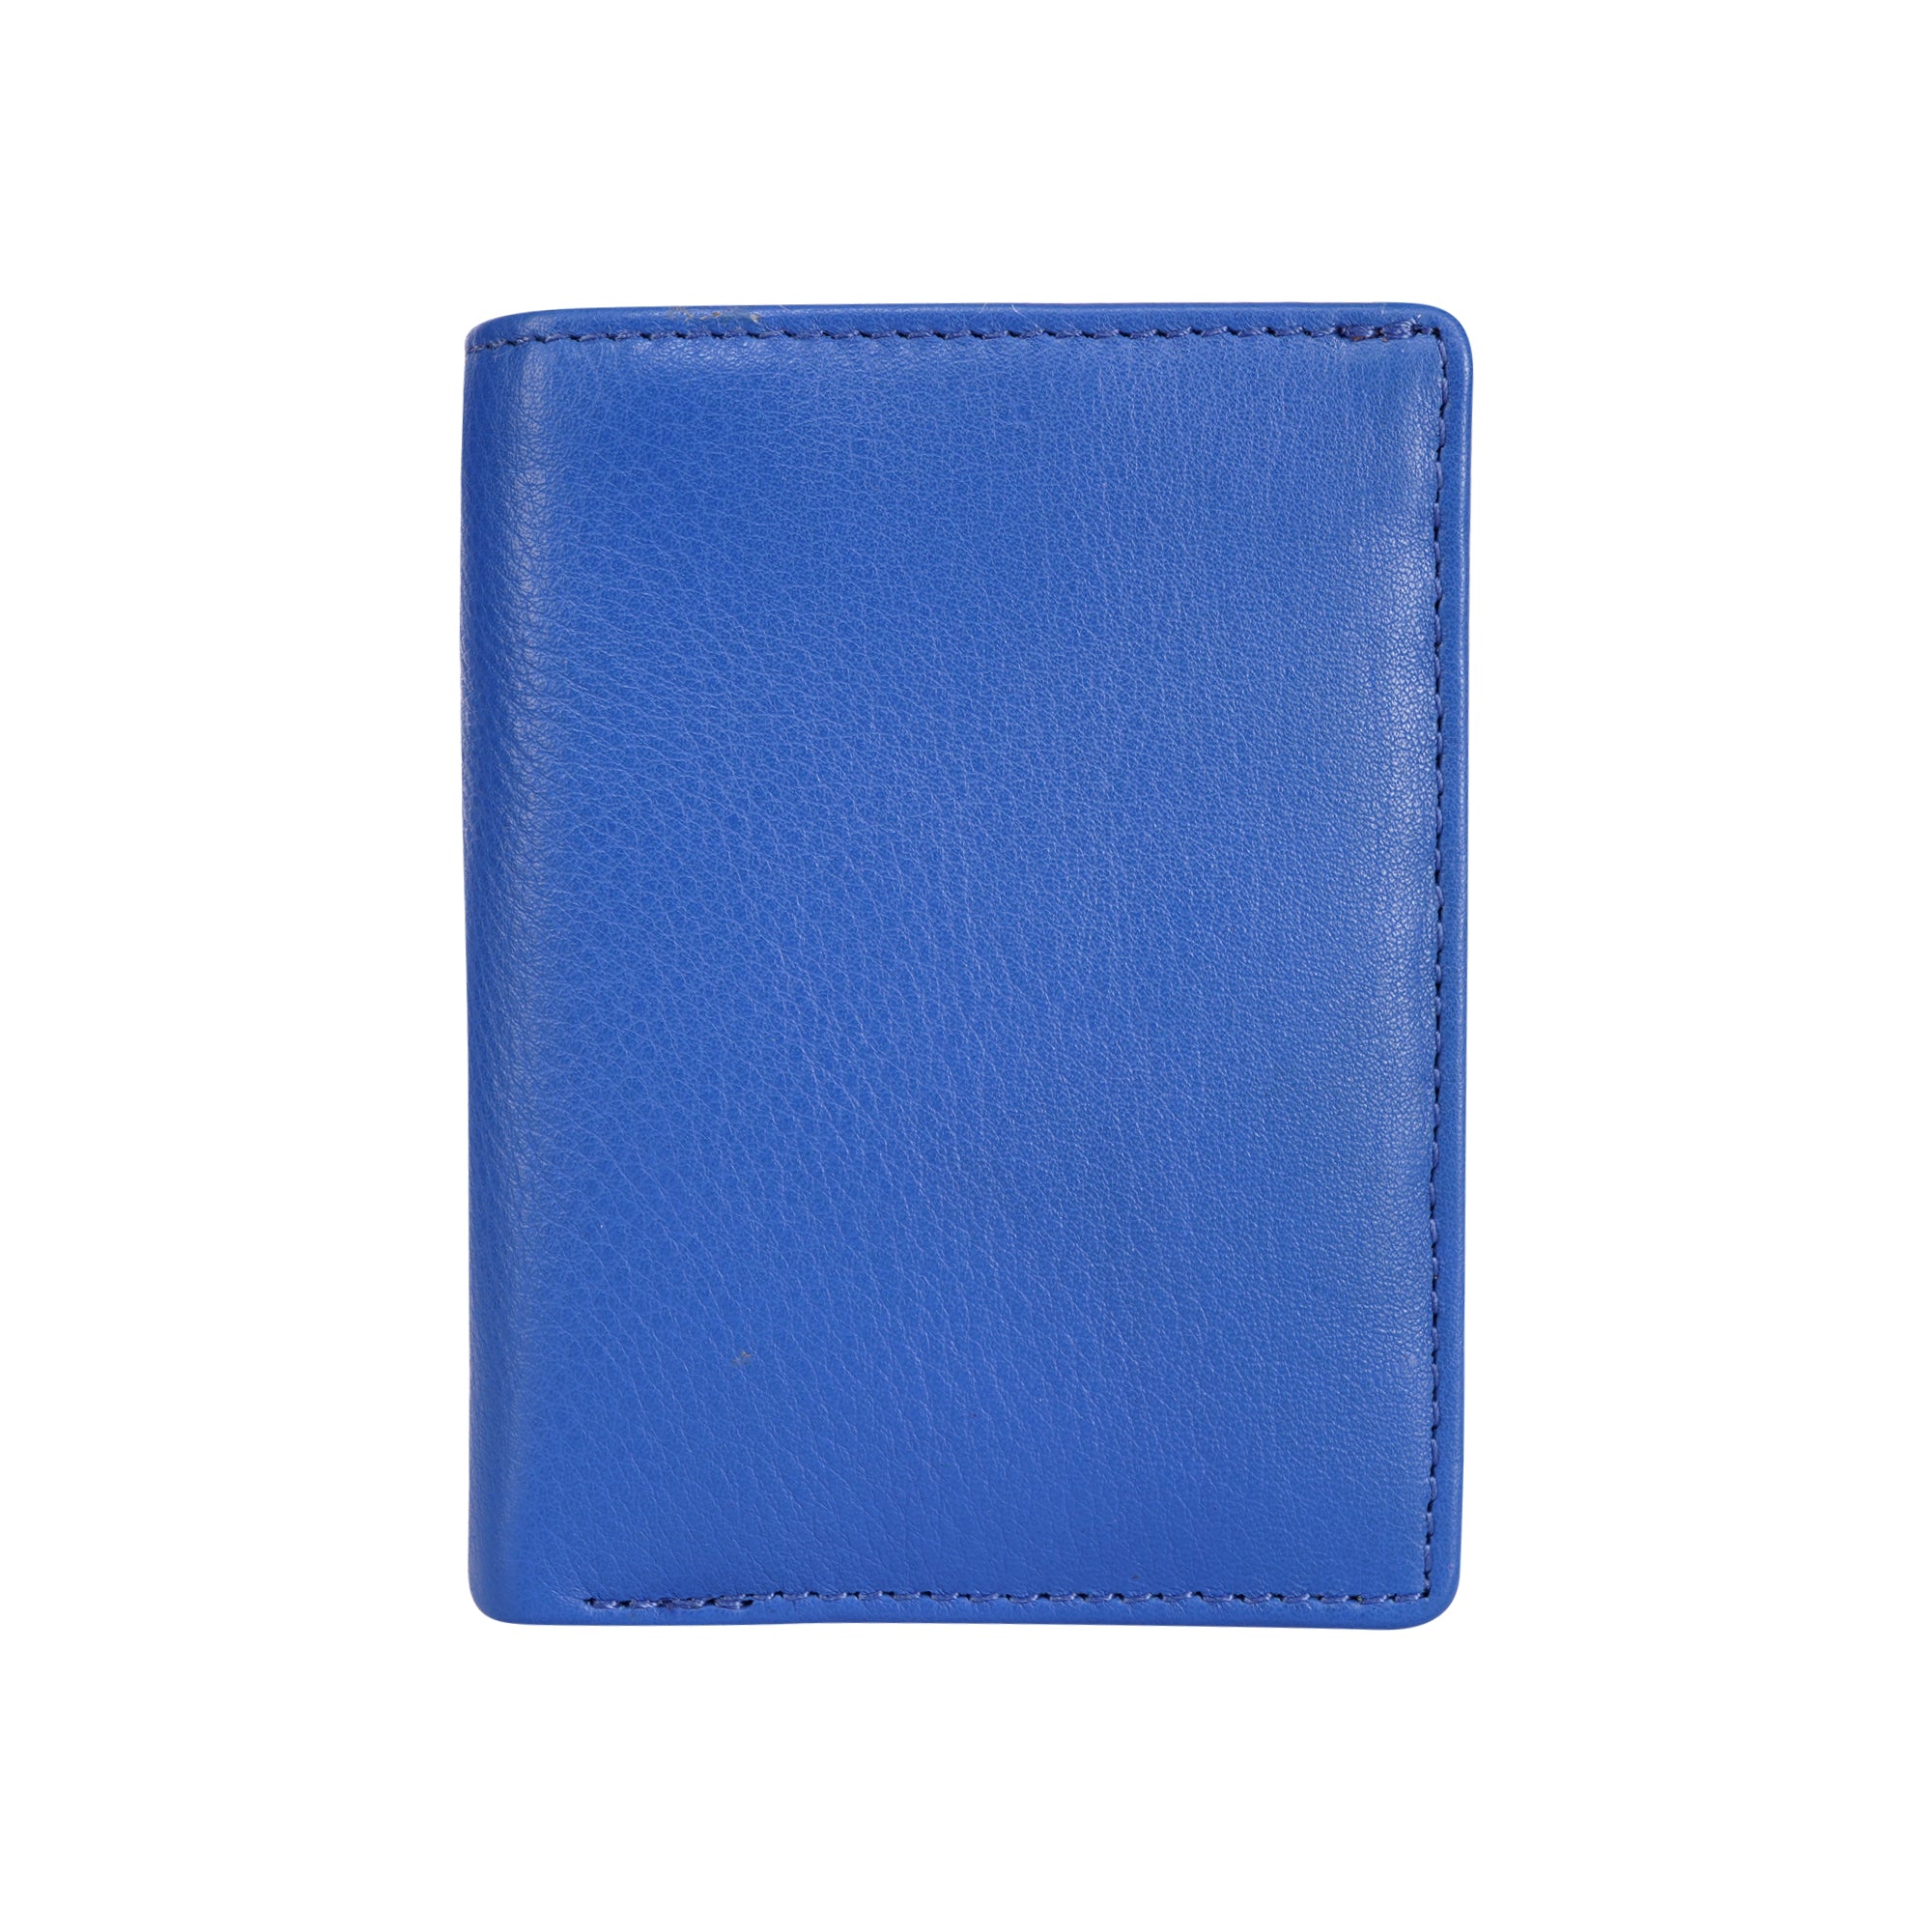 Credit Debit Leather Card Holder Multi Blue - GW8001Blue - Leather Greenwood Bag | The Greenwood Leather Online Shop Australia